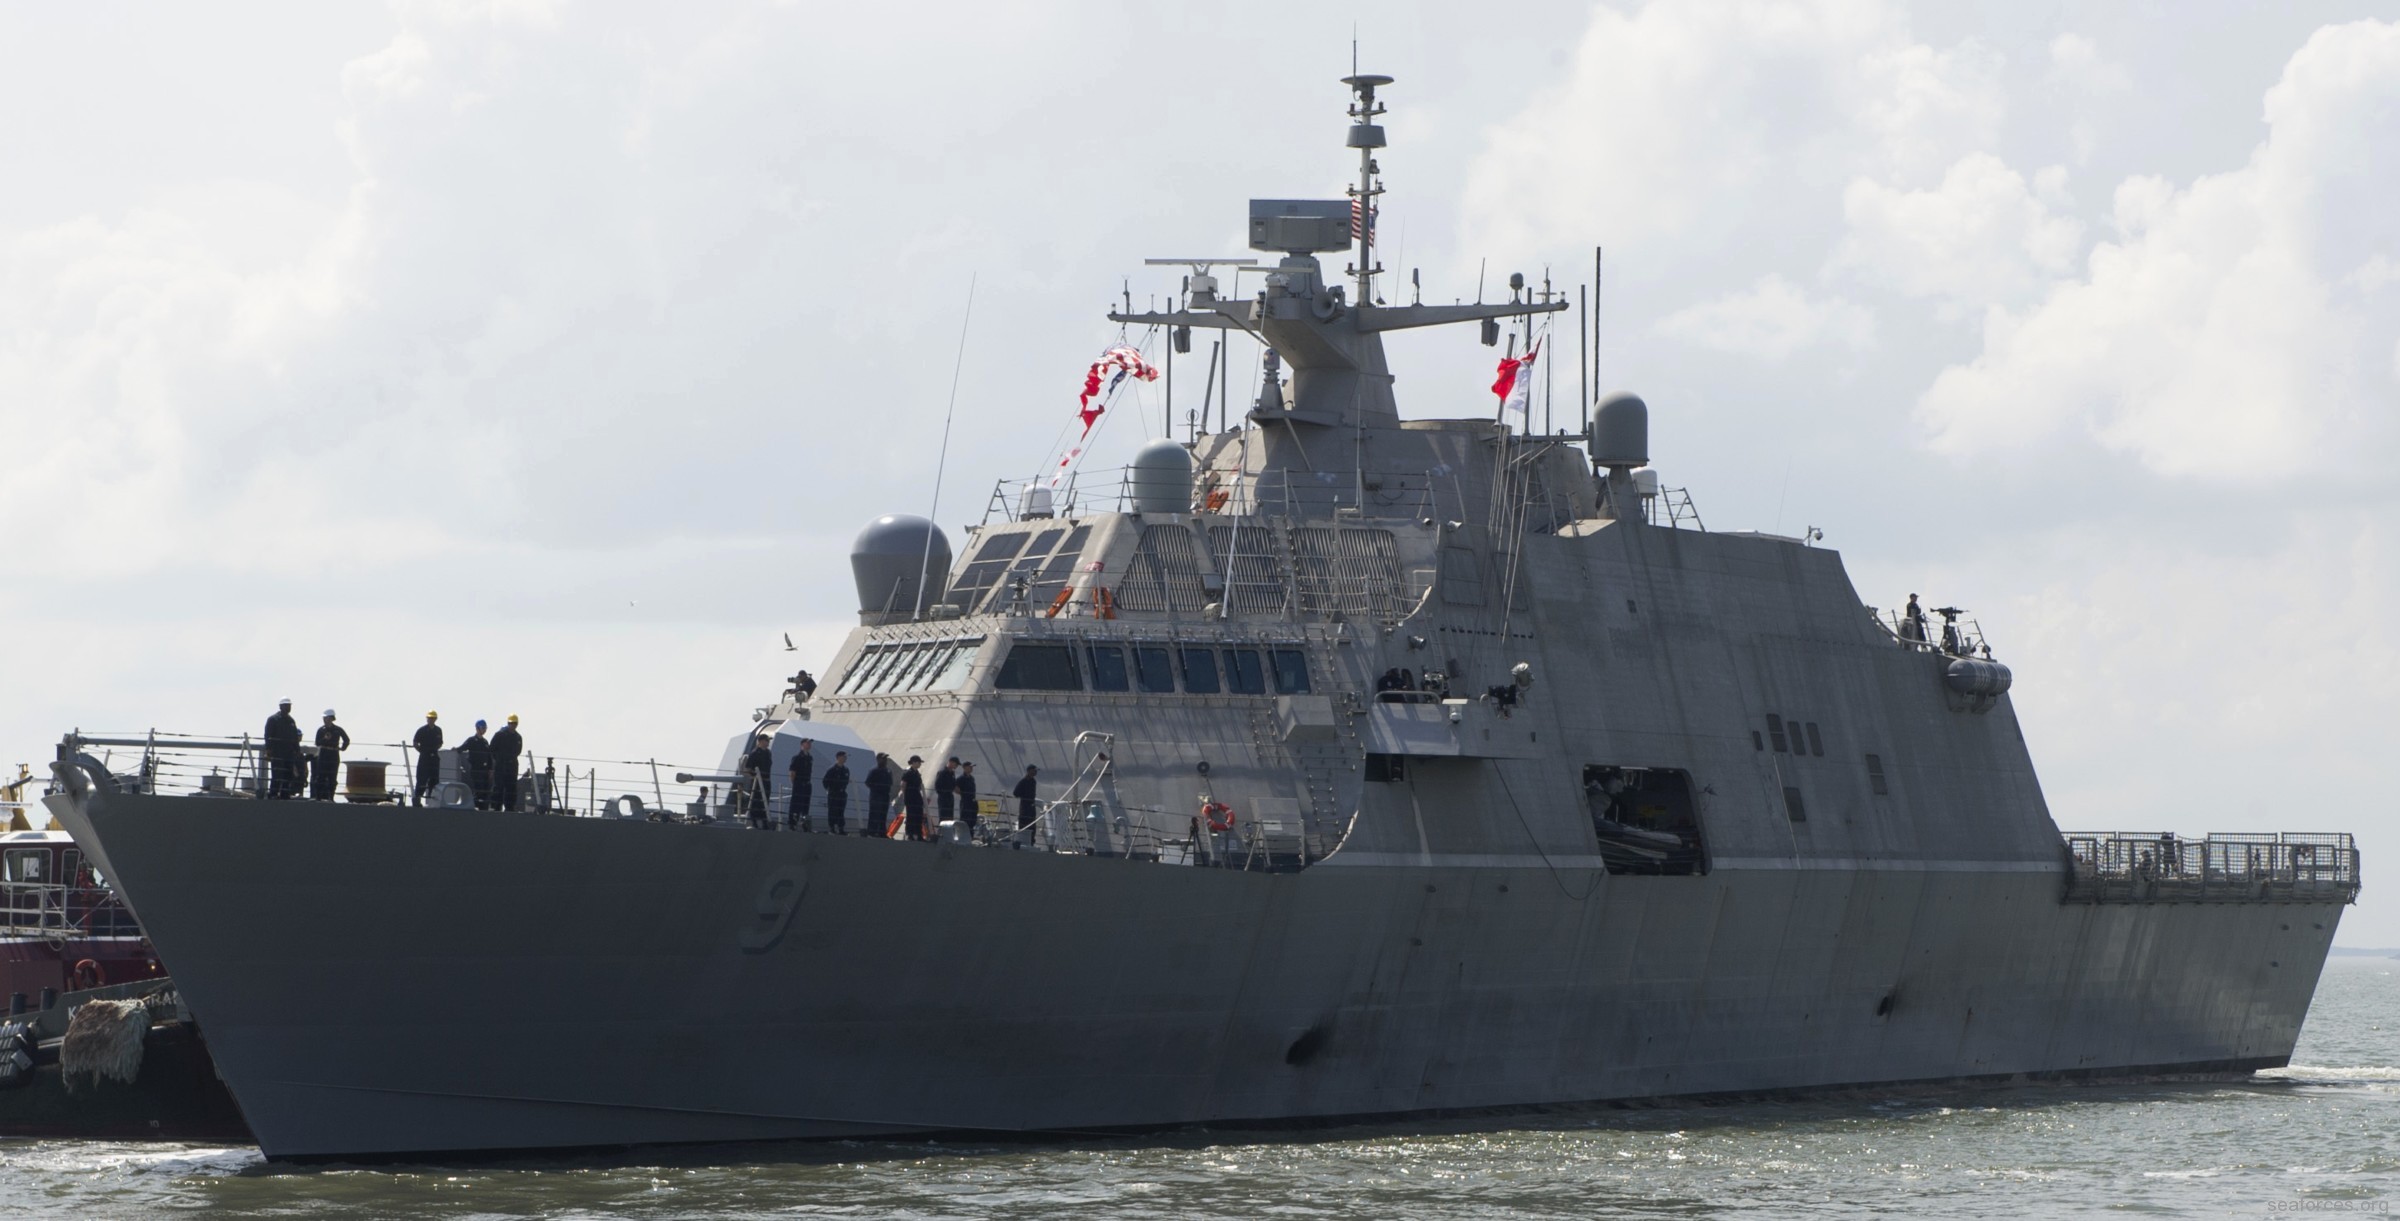 lcs-9 uss little rock freedom class littoral combat ship us navy 33 naval station norfolk virginia